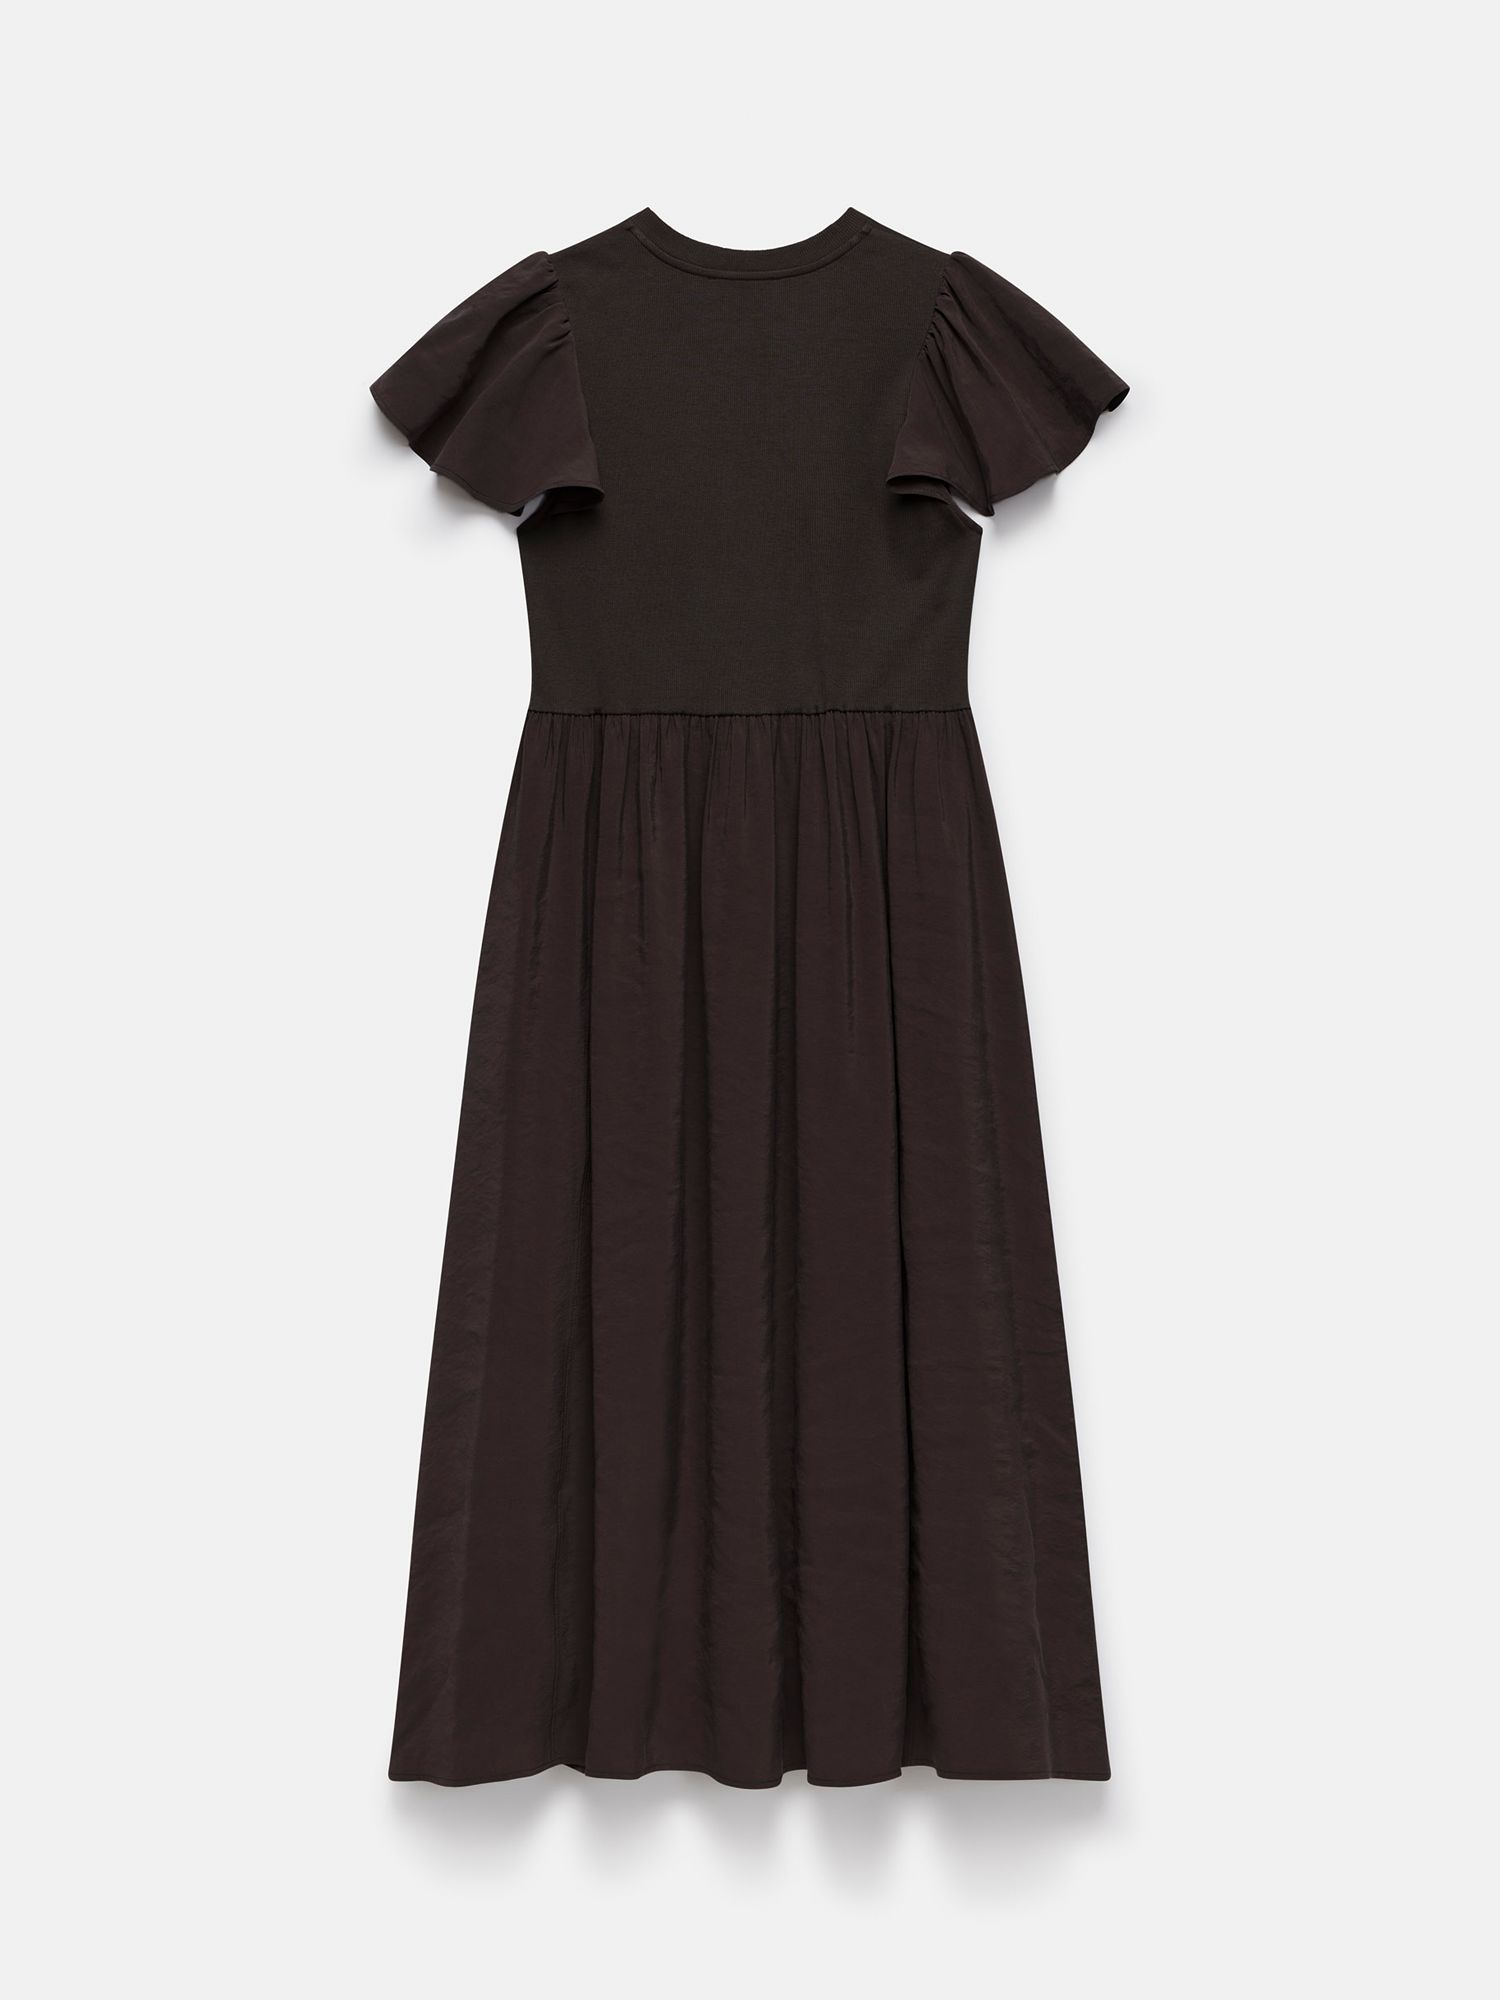 Mint Velvet Ruffle Sleeve Jersey Midi Dress, Dark Brown, L